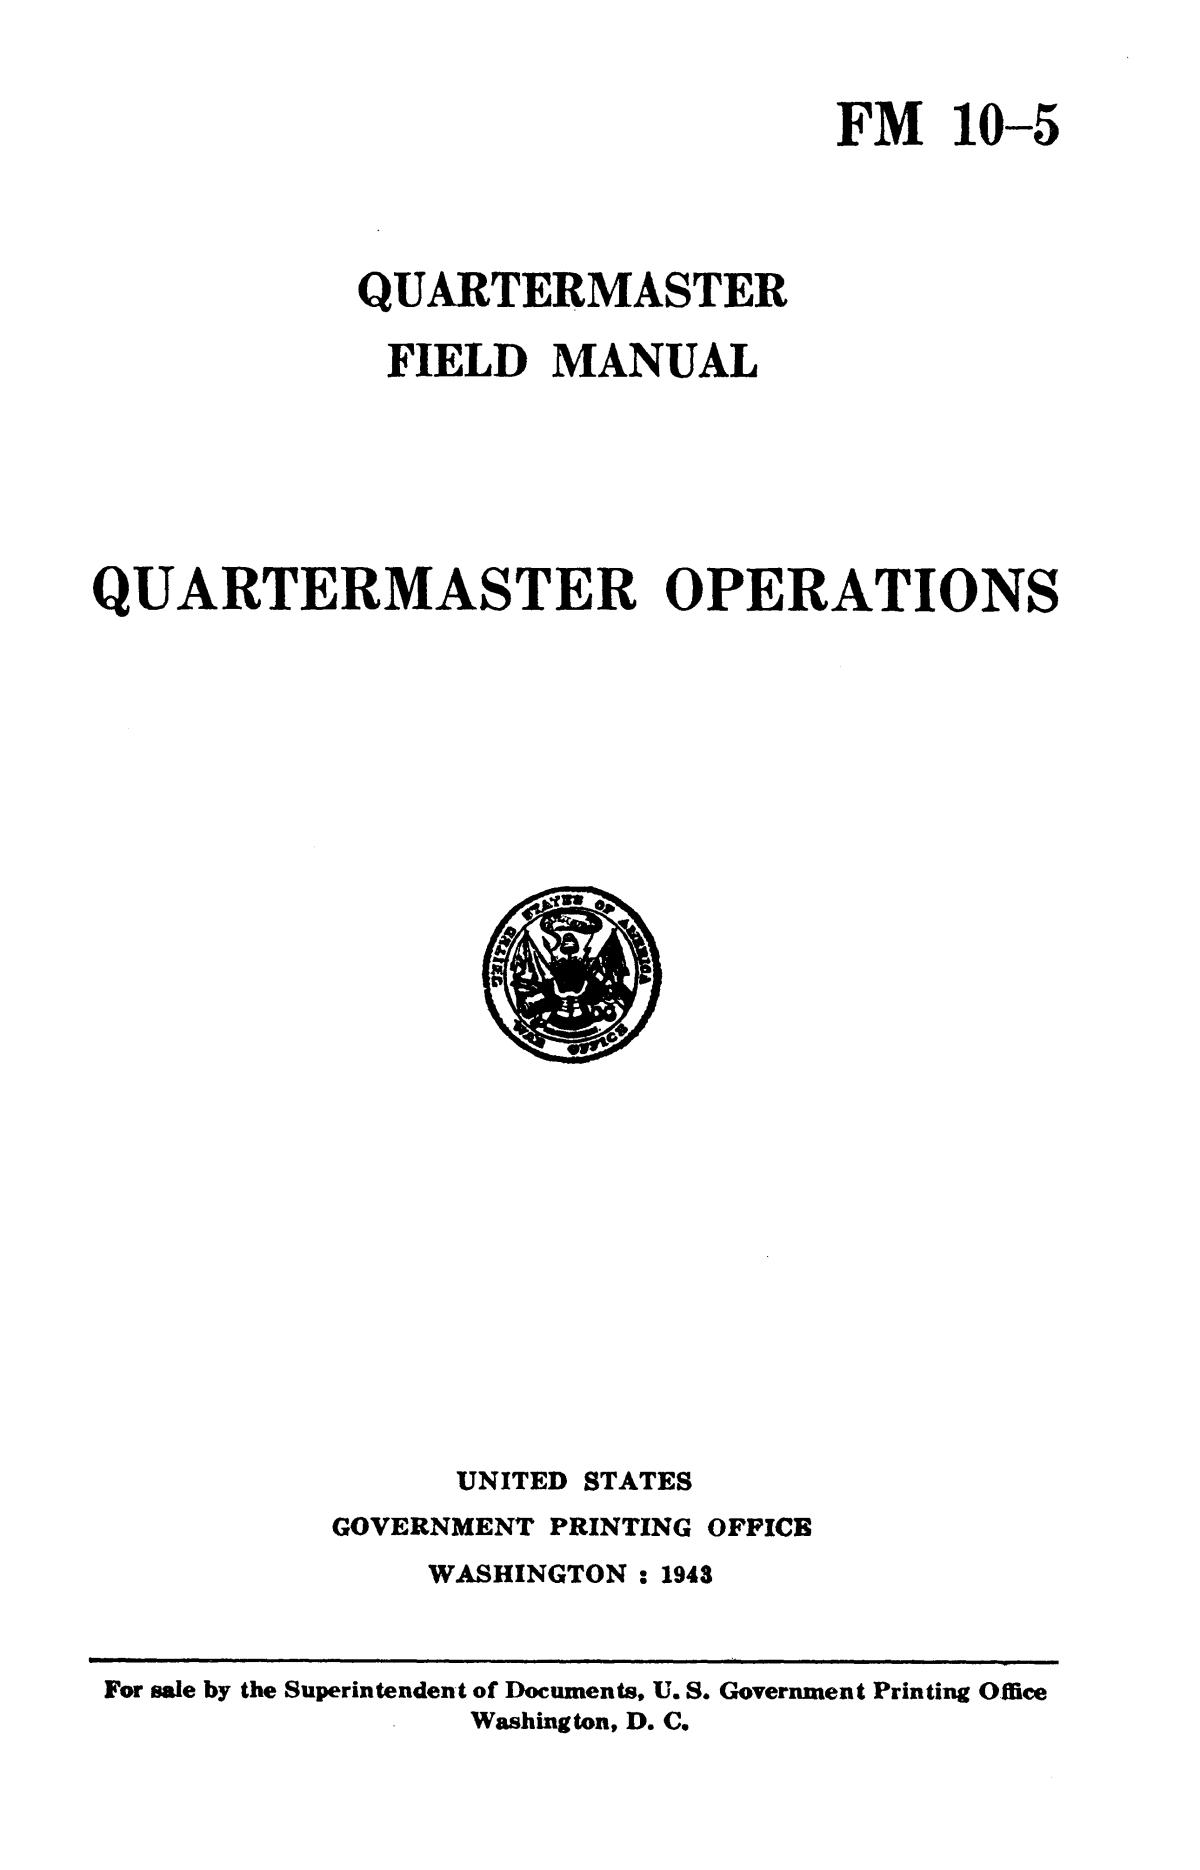 Quartermaster operations.
                                                
                                                    I
                                                